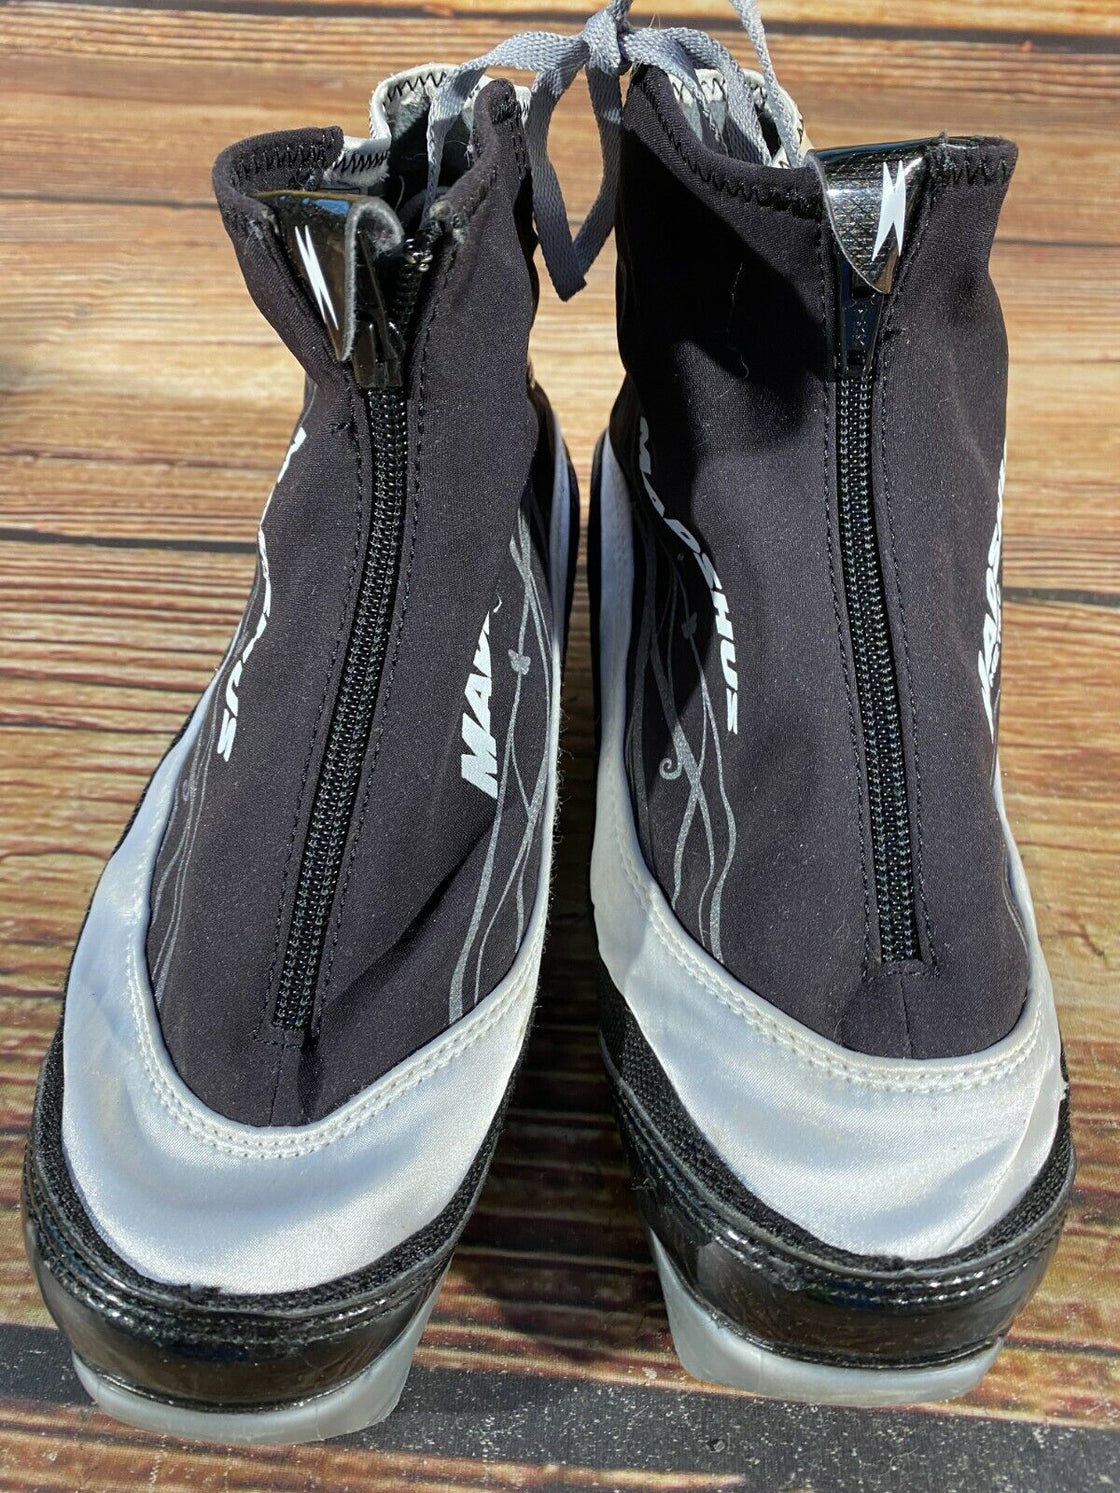 Madshus Metis C Cross Country Ski Boots Size EU38 US6.5 for NNN